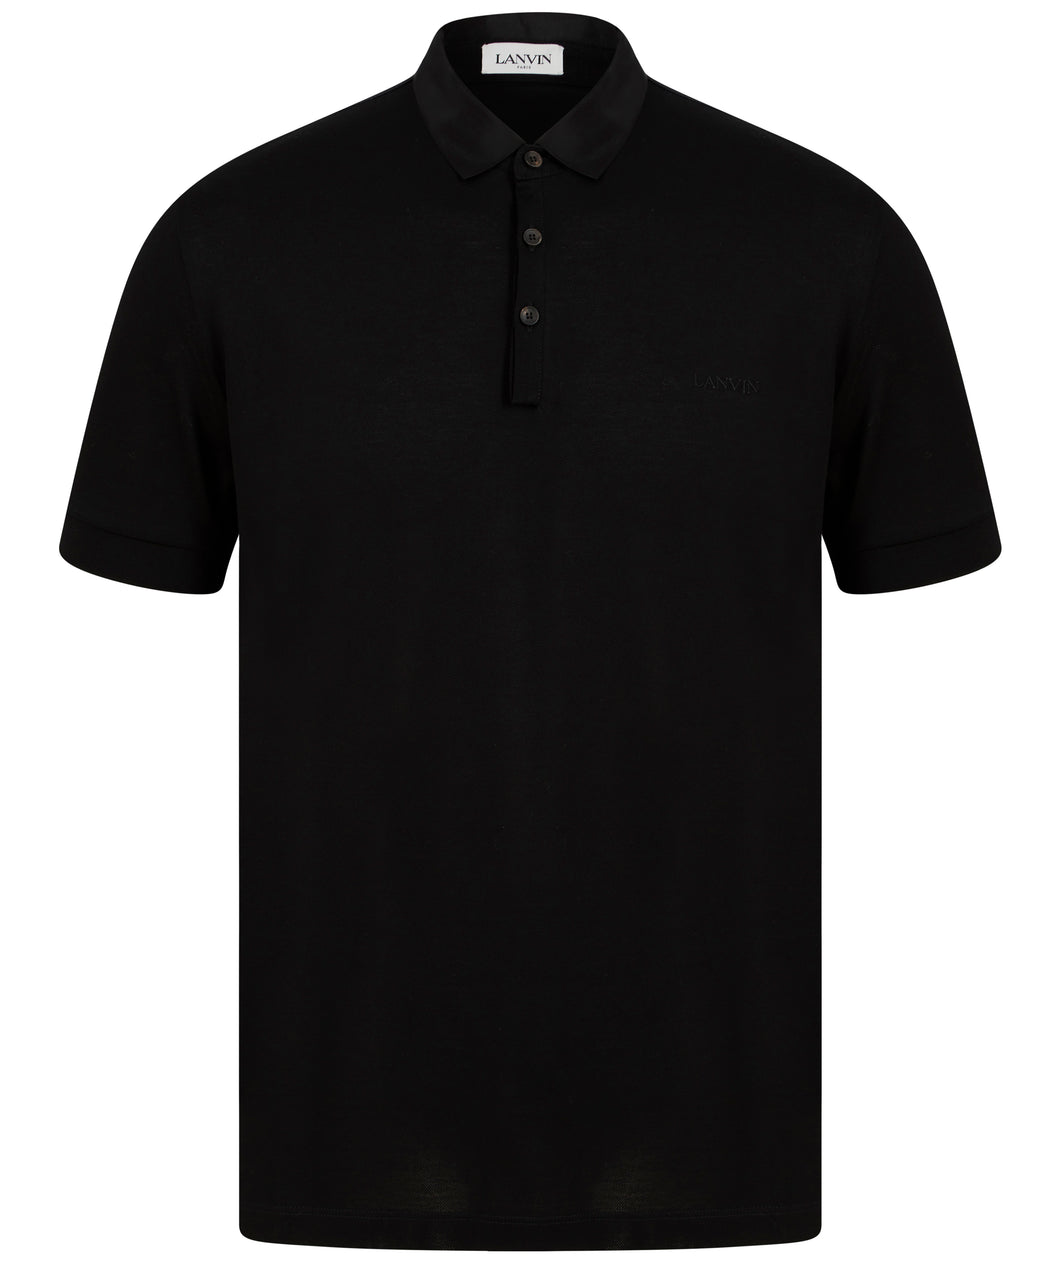 Lanvin Grosgrain Polo Shirt Black